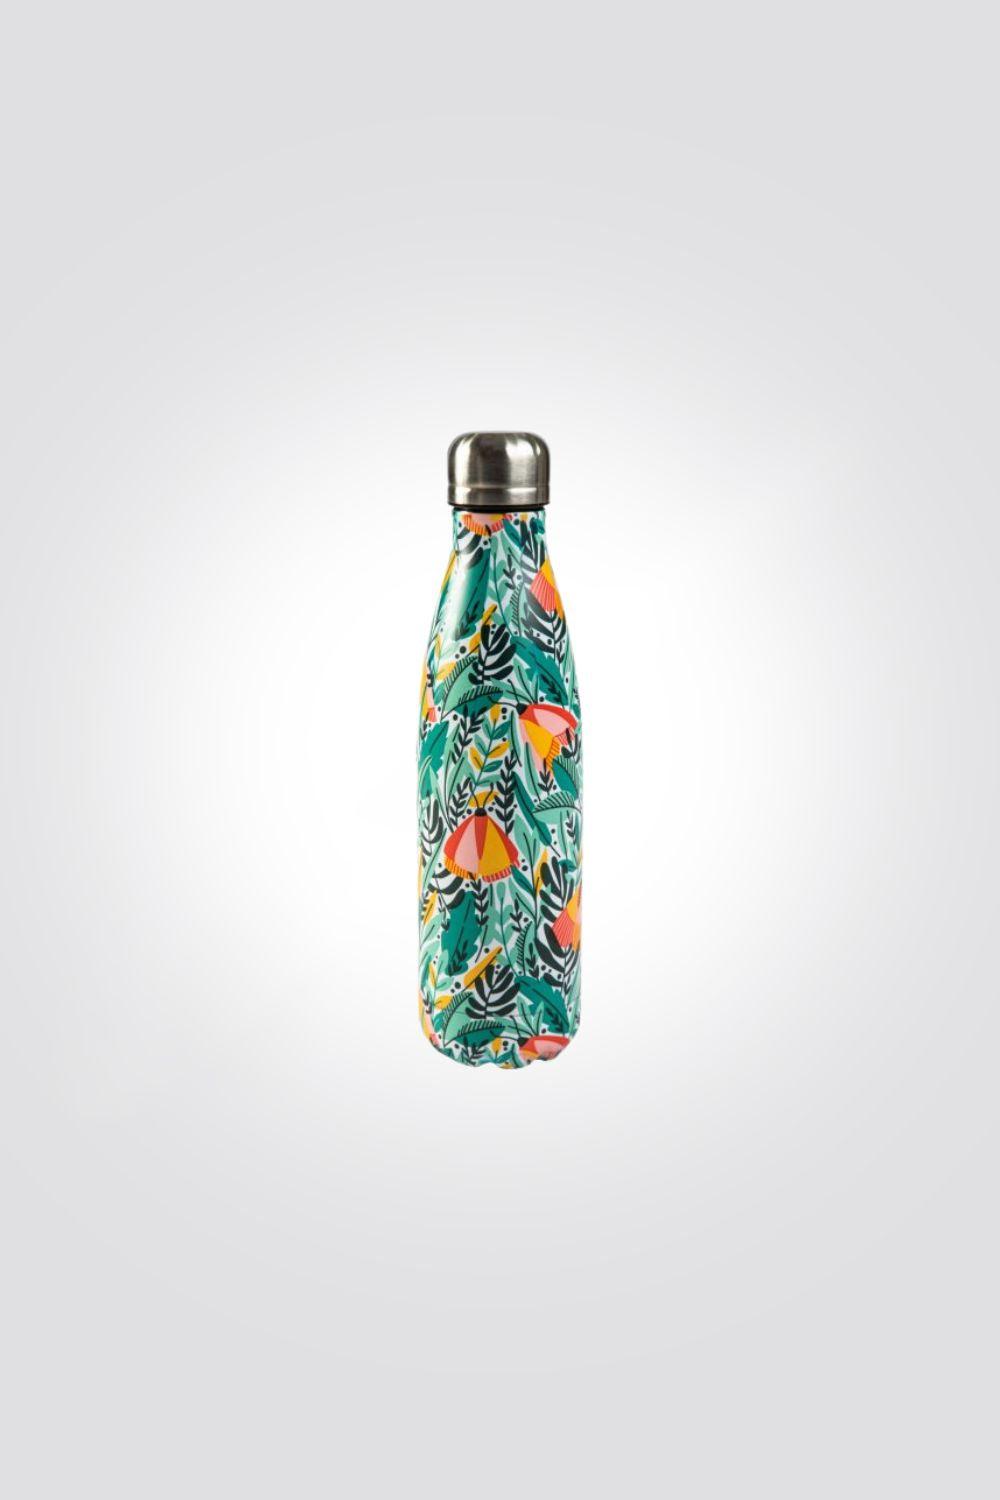 ARCOSTEEL - בקבוק דקאל נירוסטה תרמי יער ירוק 500 מ"ל - MASHBIR//365